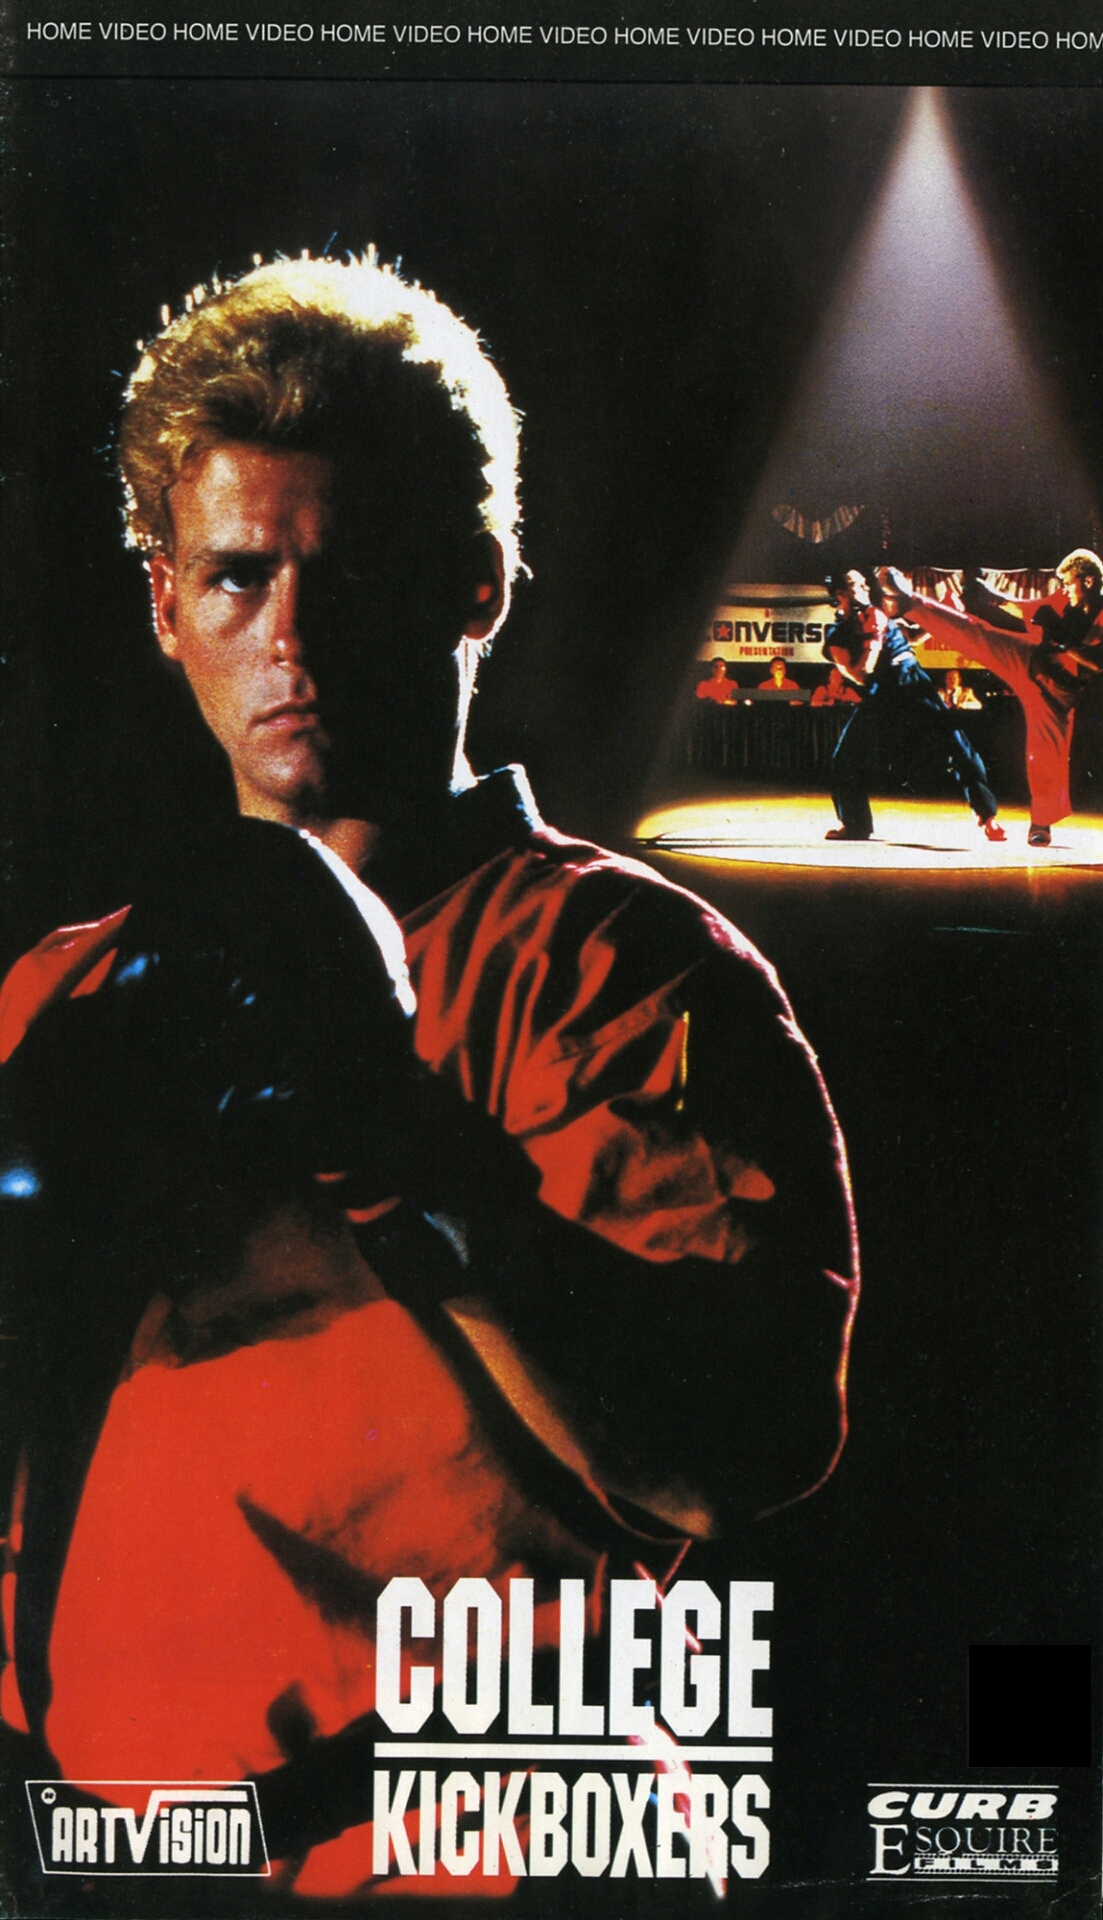 College Kickboxers (1991) starring Ken McLeod on DVD on DVD